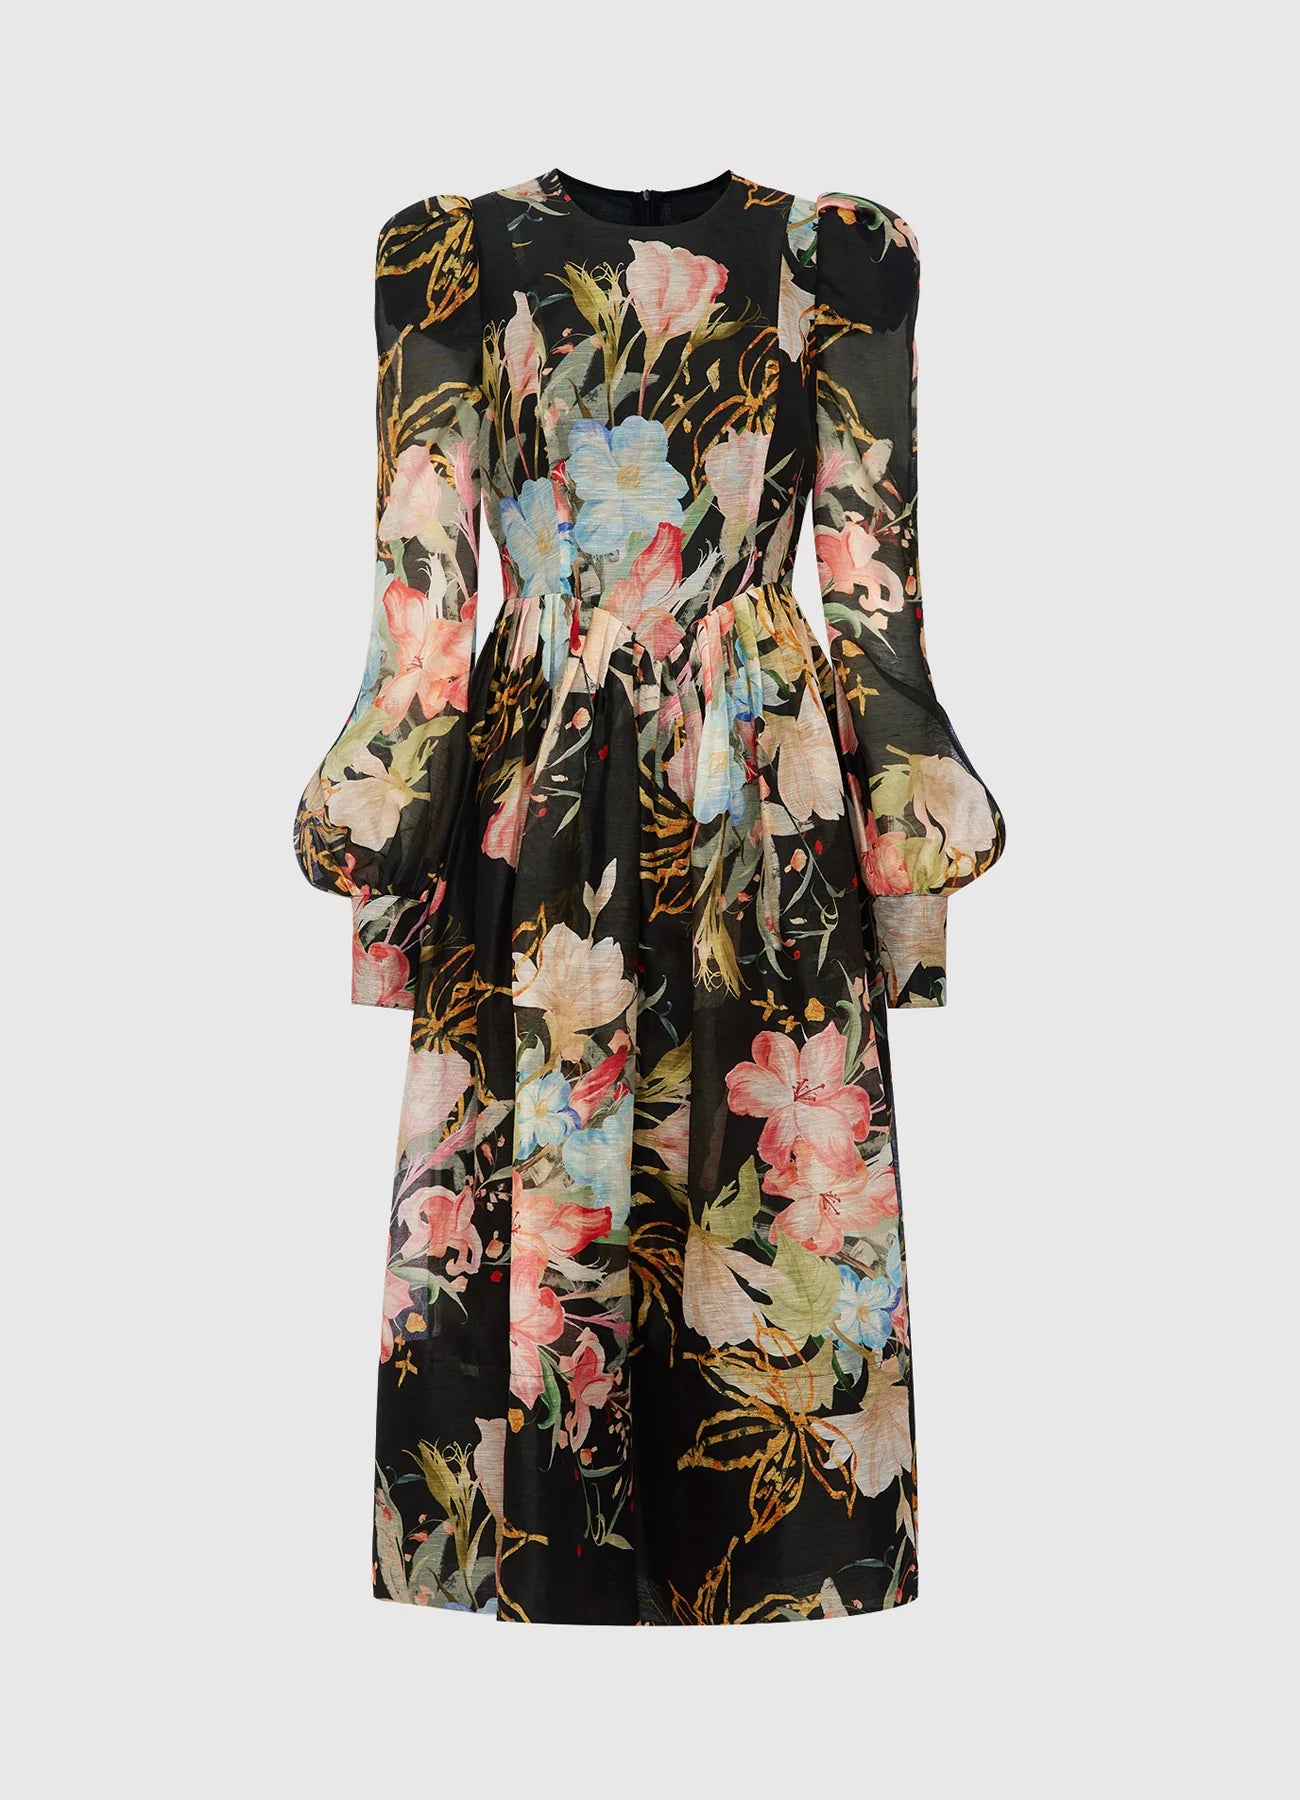 LEO LIN Jordana Structured Shoulder Dress - Opulent Print in Mystic - Pinkhill, Darwin boutique, high end fashion, Darwin Fashion